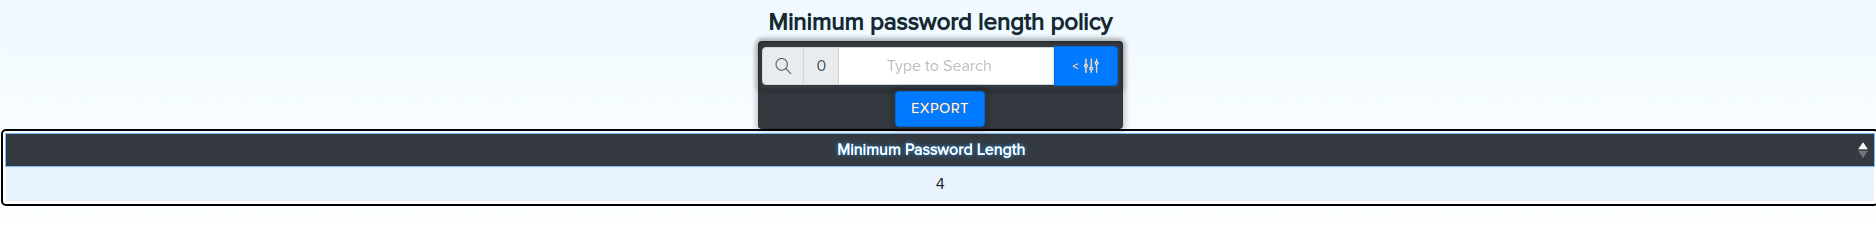 bloodyad_minimum_password_length.png